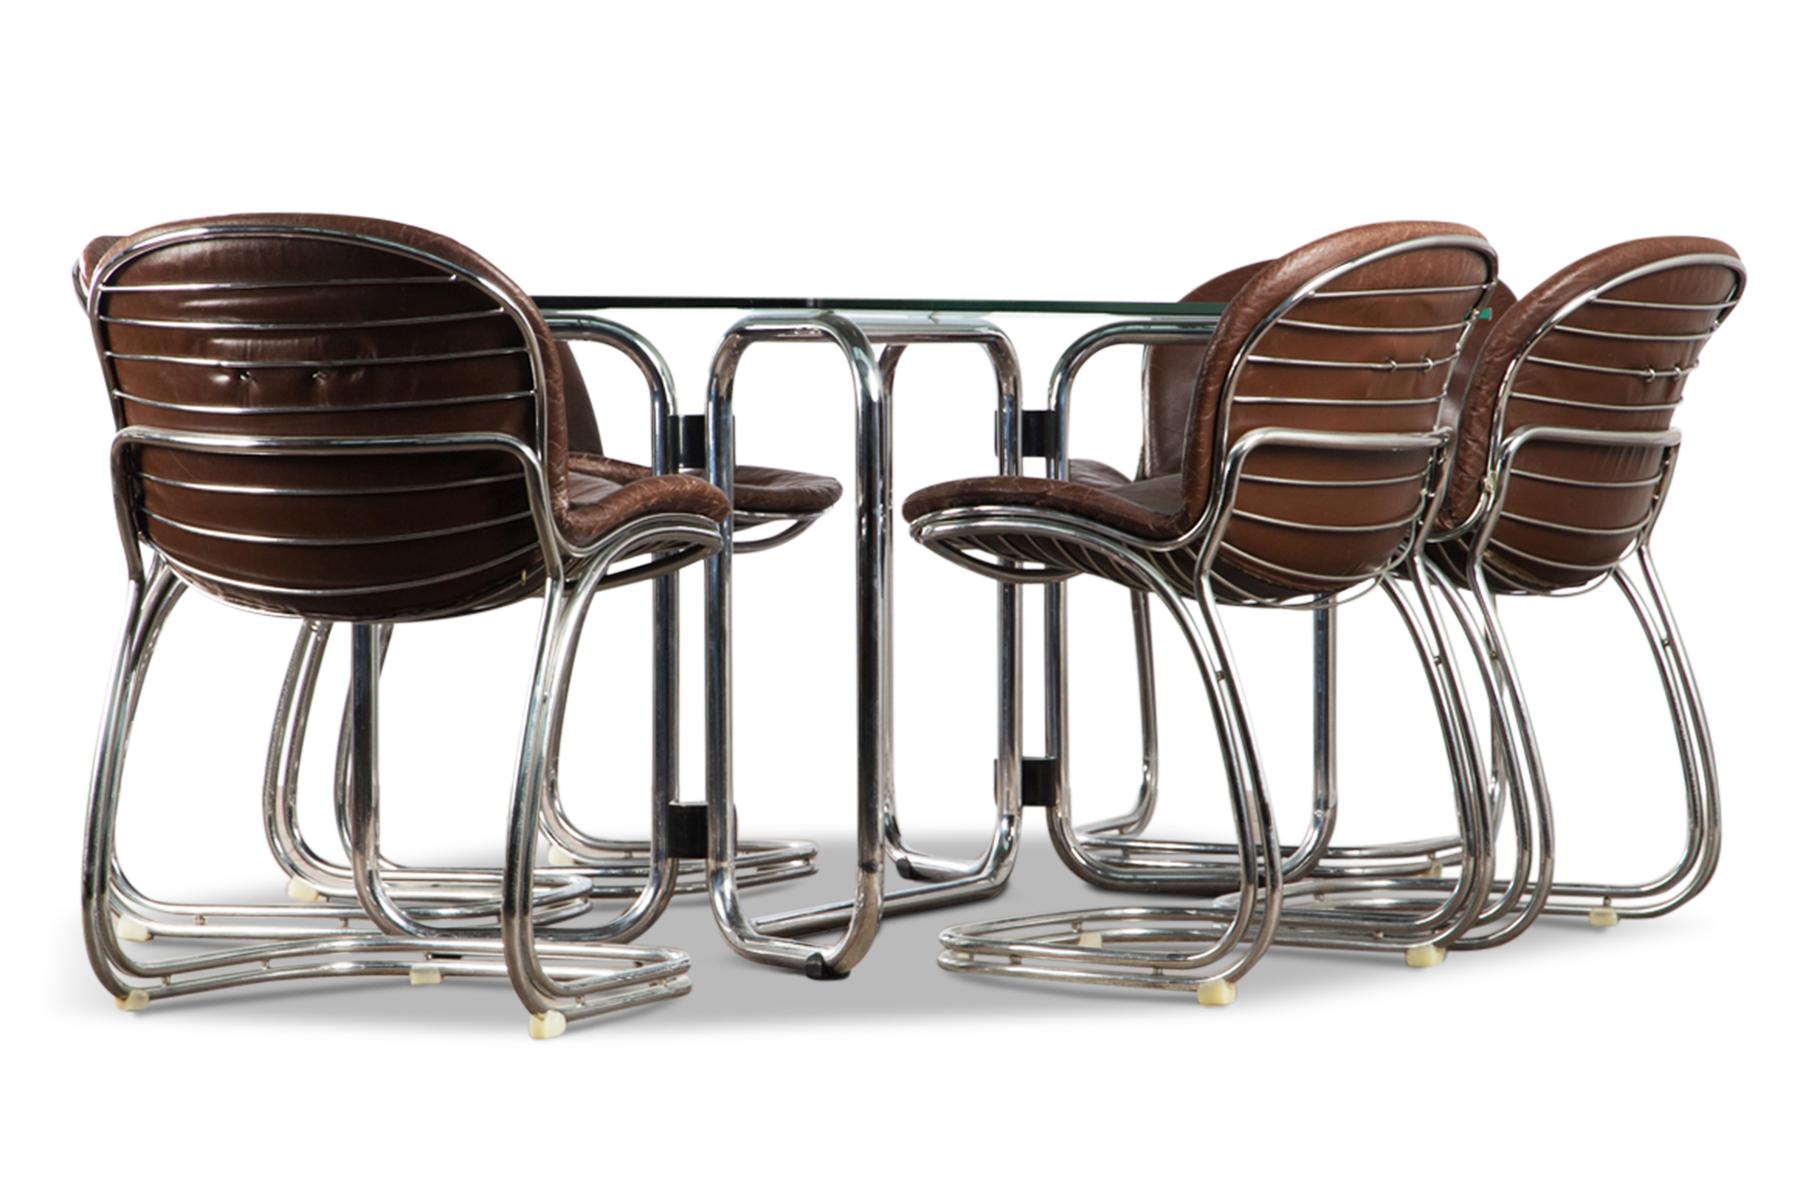 Origin: Denmark
Designer: Gastone Rinaldi
Manufacturer: Rima Mode
Era: 1970s
Materials: Chrome, glass, leather
Measurements: Table – 70.75 long x 36.5 wide x 29 tall chairs- 24.5 wide x 19.75 deep x x32 tall

Condition: In good original